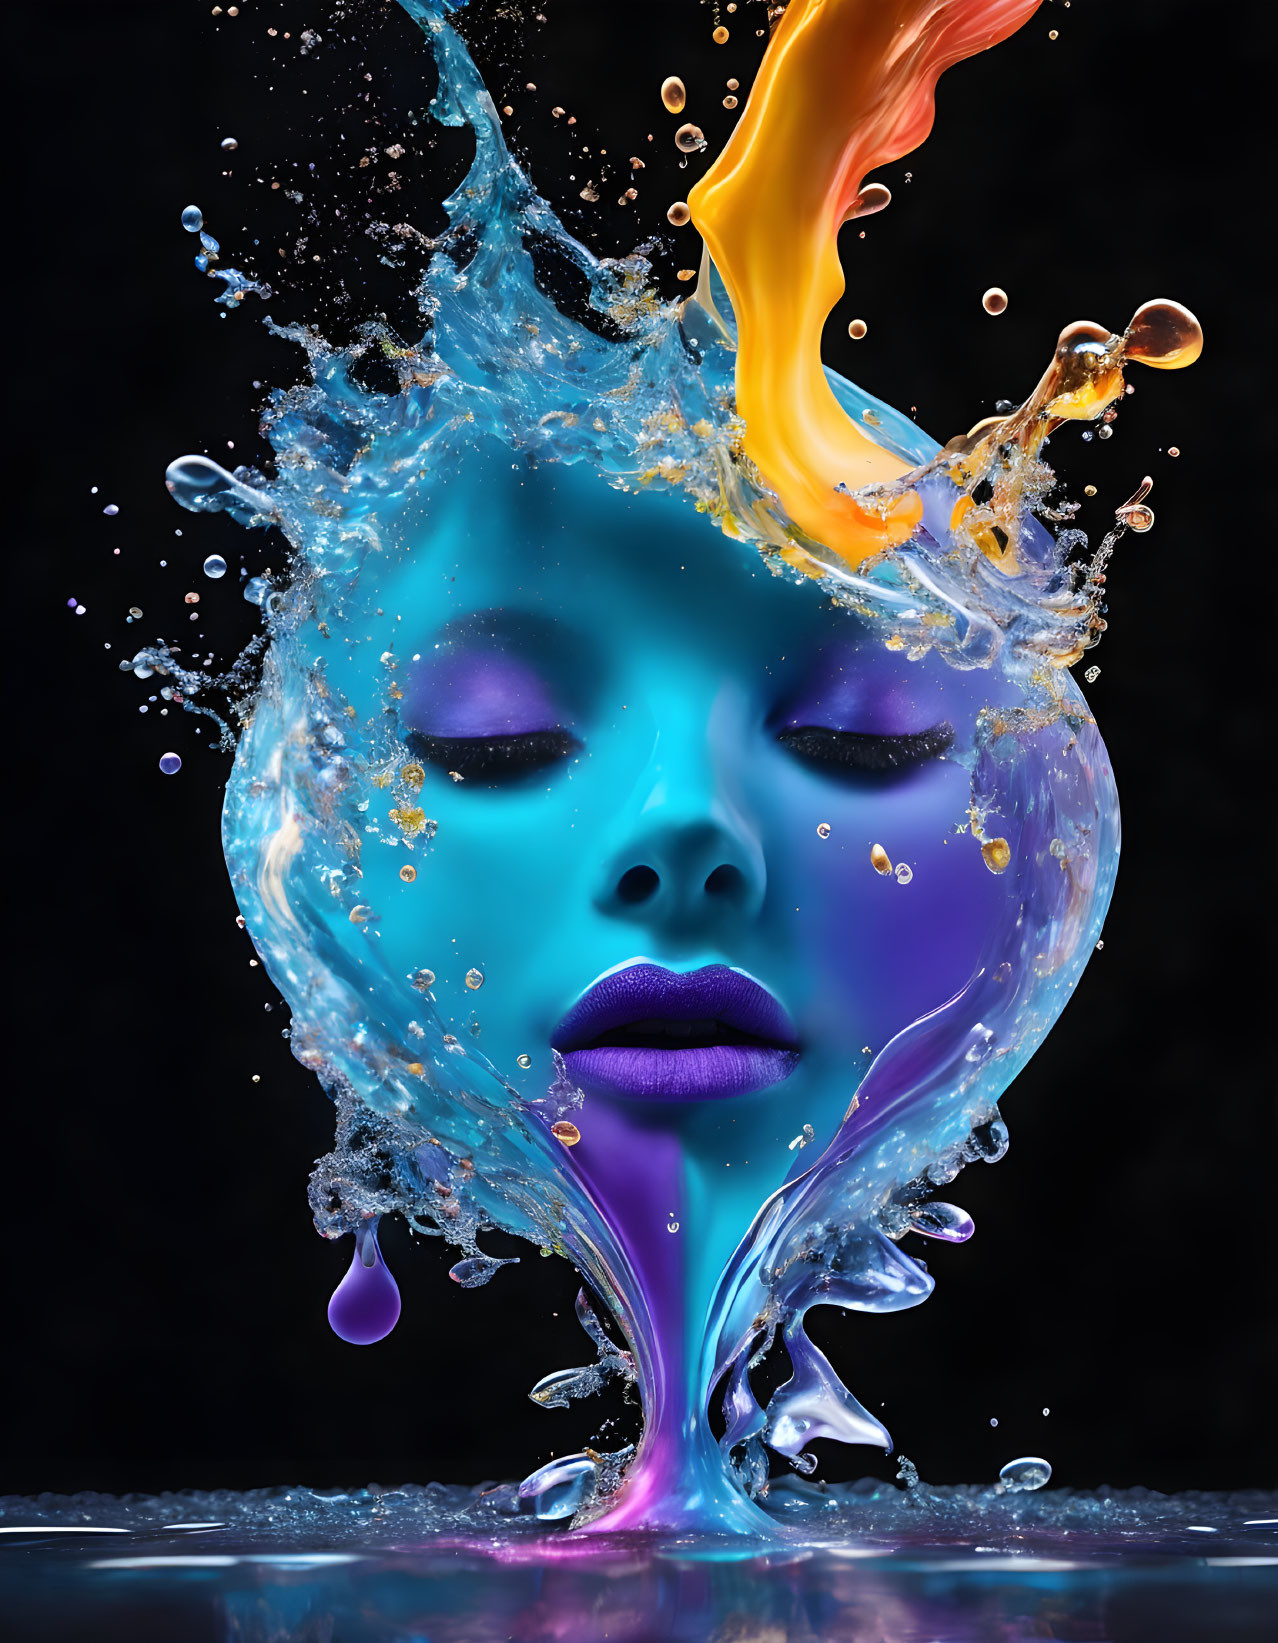 Colorful 3D Female Face Artwork: Blue Skin, Purple Lips, Water Splashes,